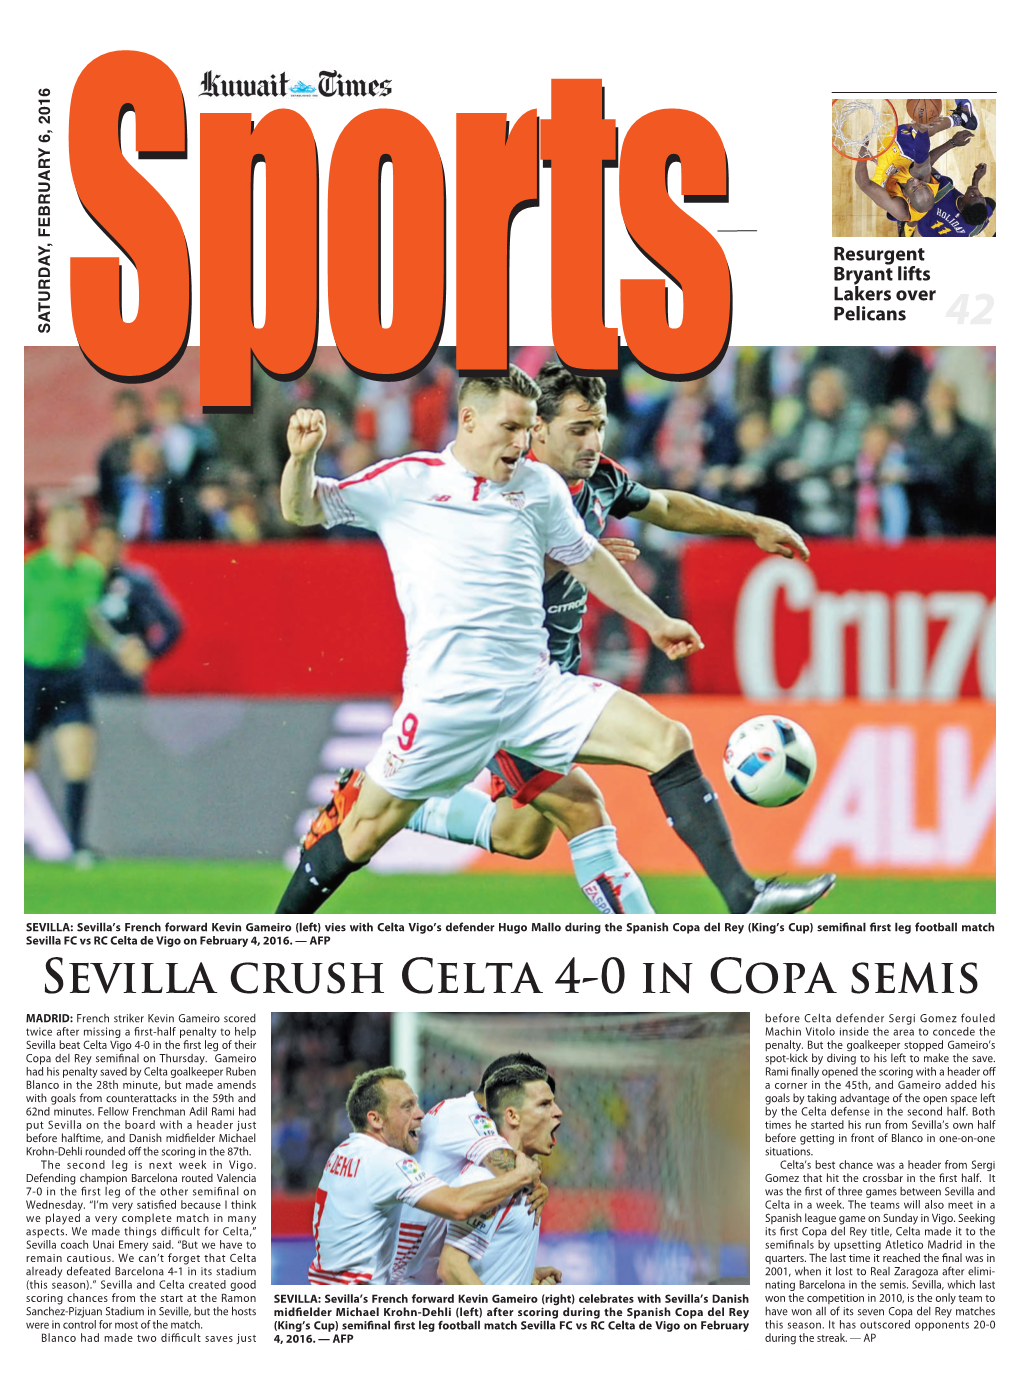 42 Sevilla Crush Celta 4-0 in Copa Semis